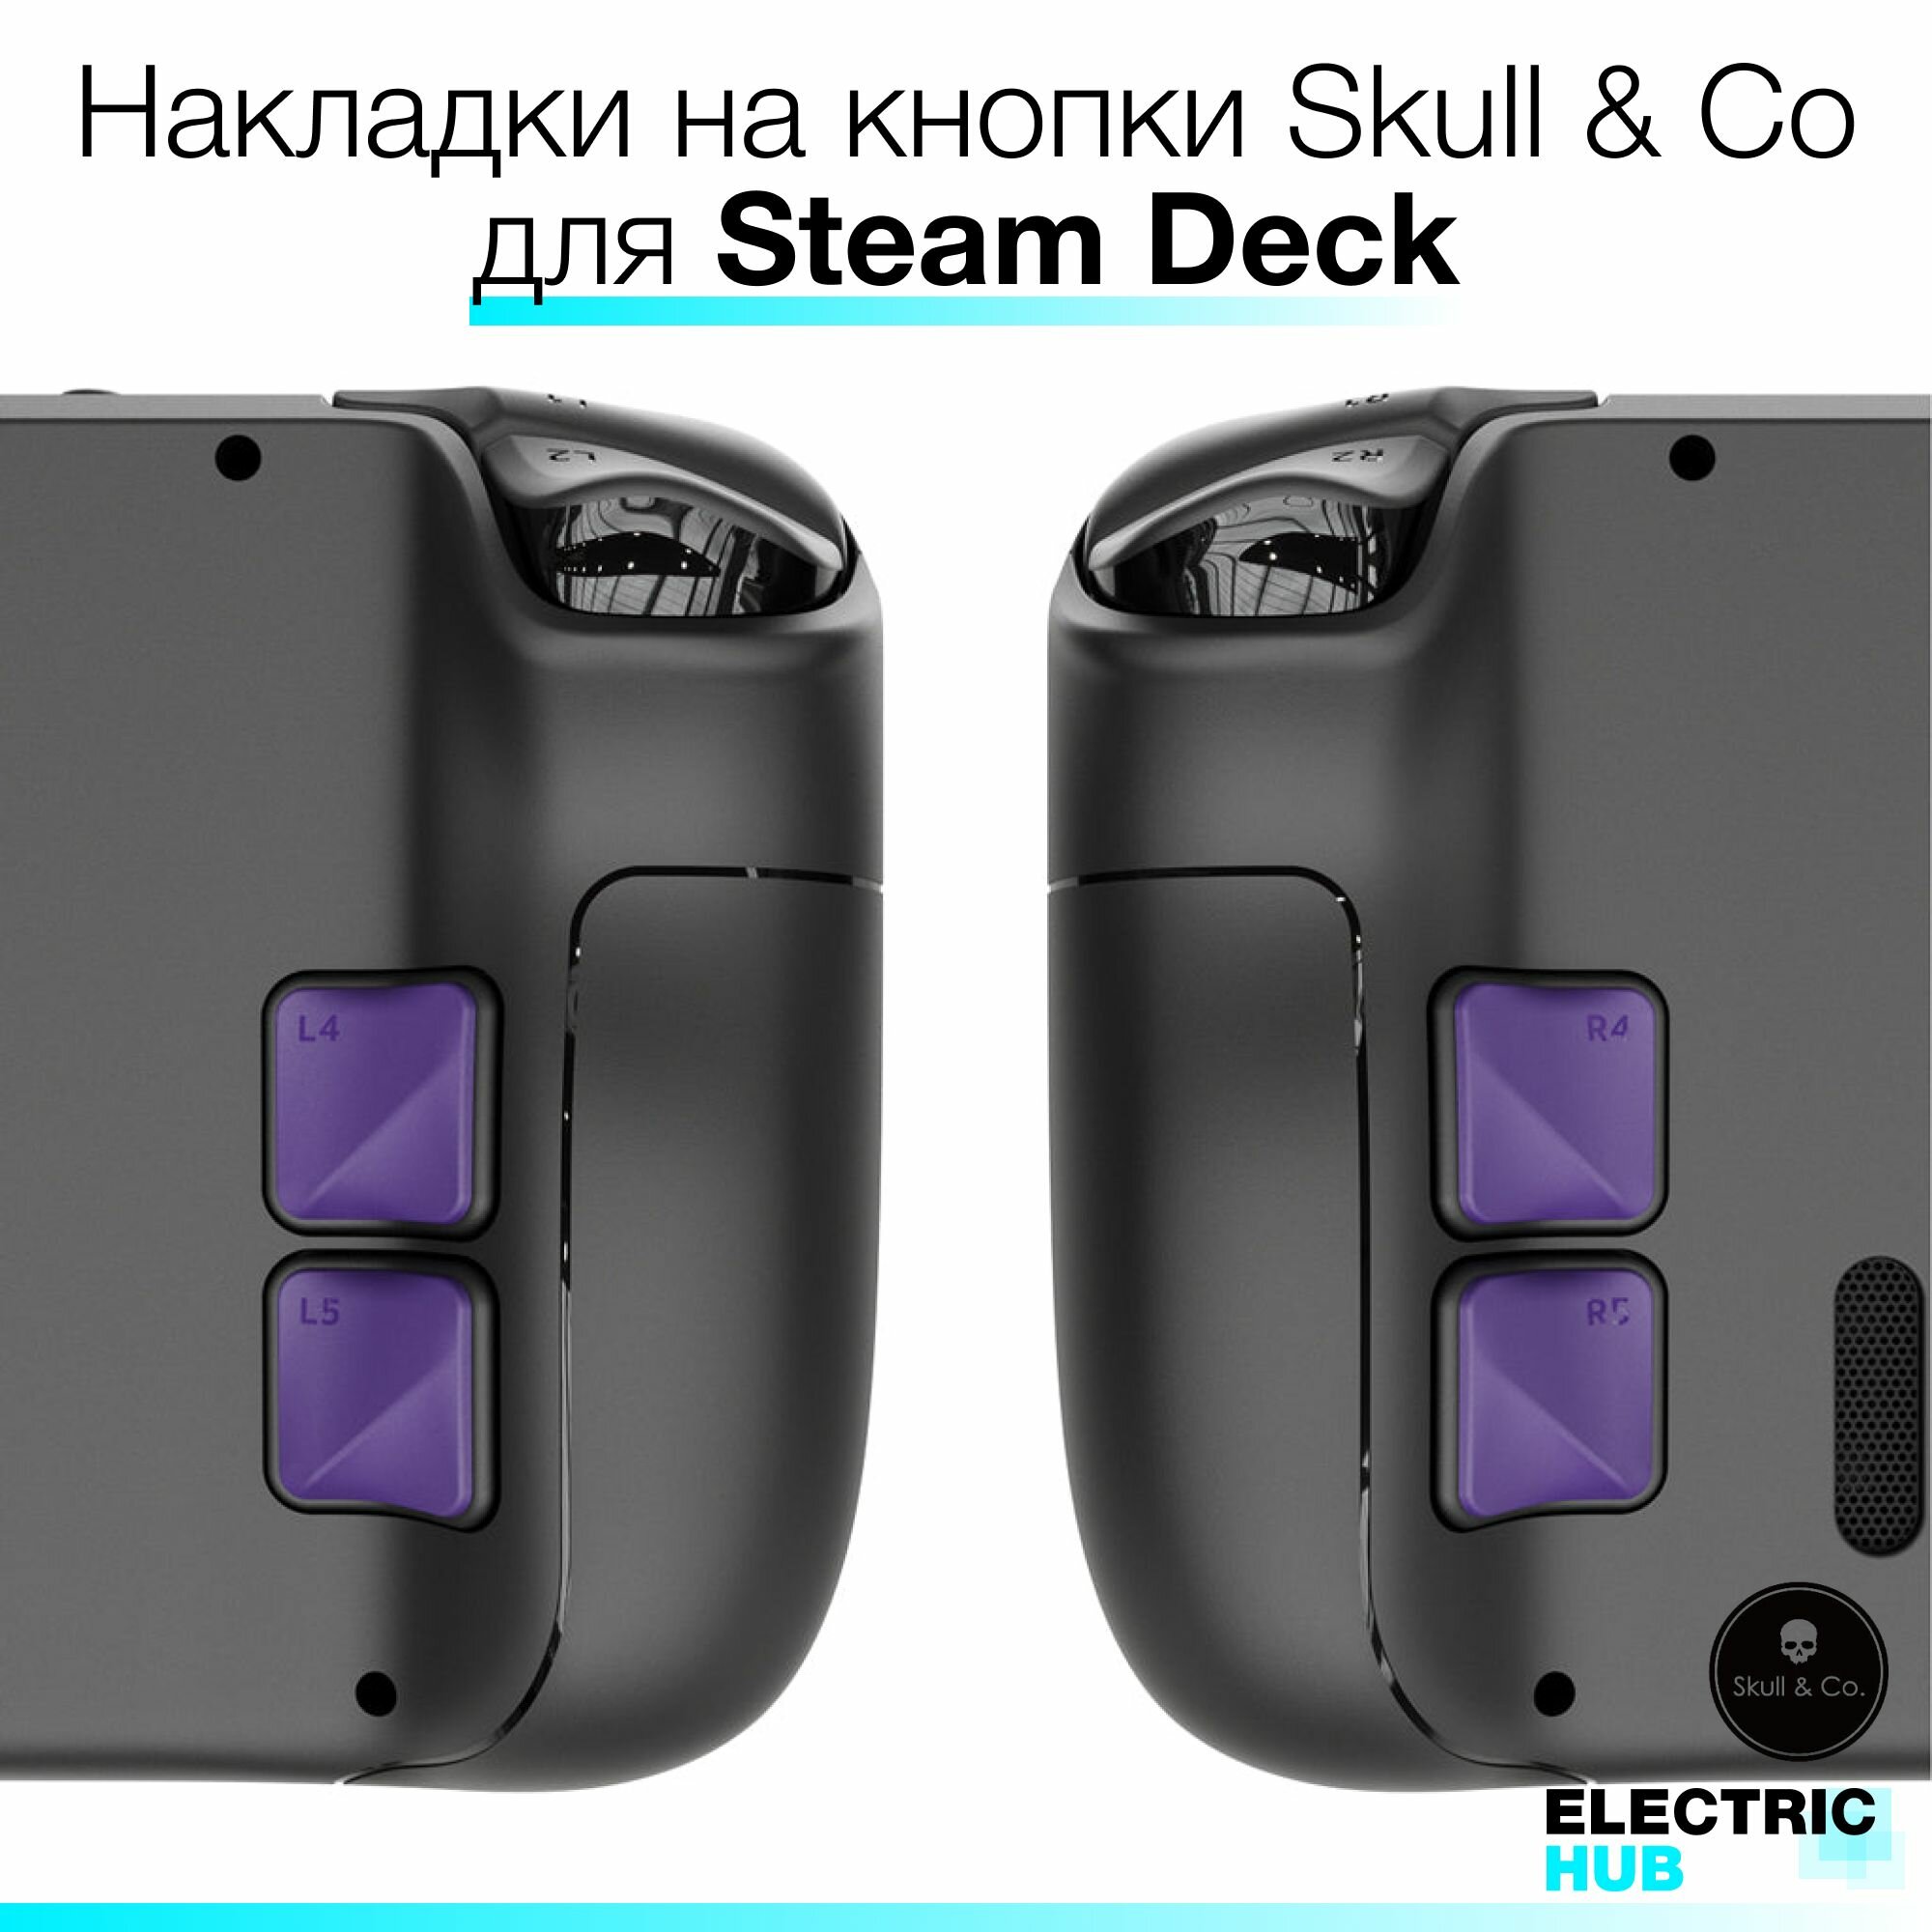 Премиум накладки на кнопки Skull & Co для Steam Deck/OLED комплект из 4 штук цвет Фиолетовый (Galactic Purple)